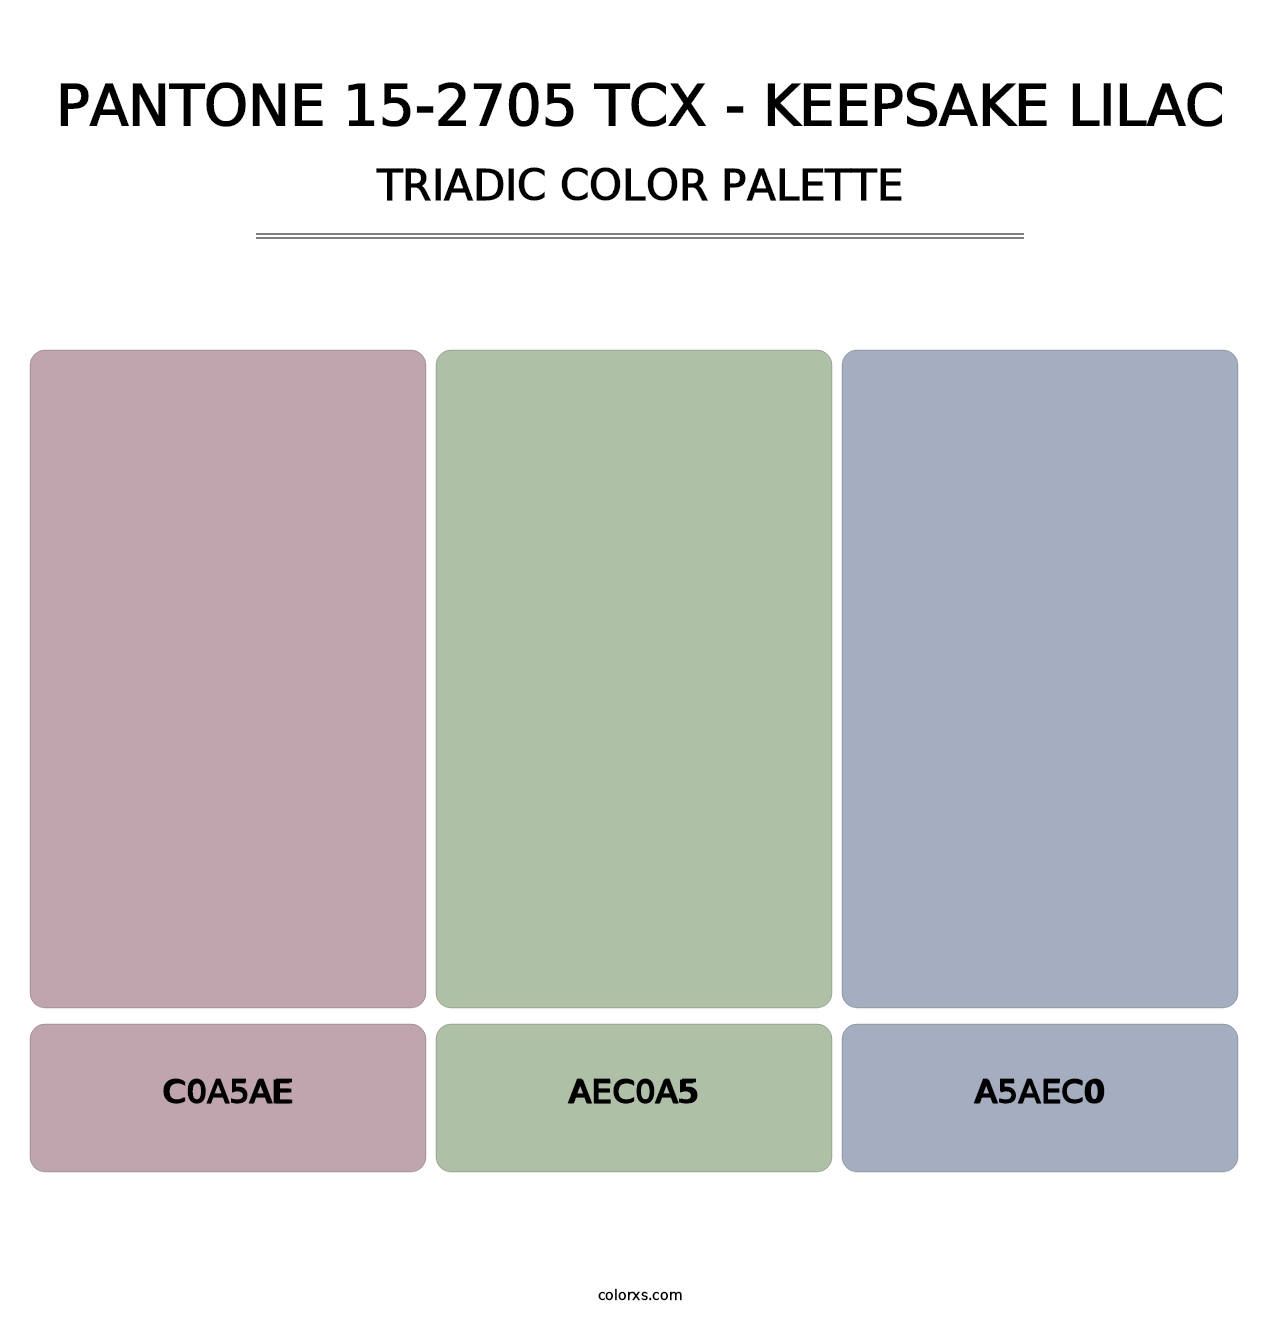 PANTONE 15-2705 TCX - Keepsake Lilac - Triadic Color Palette